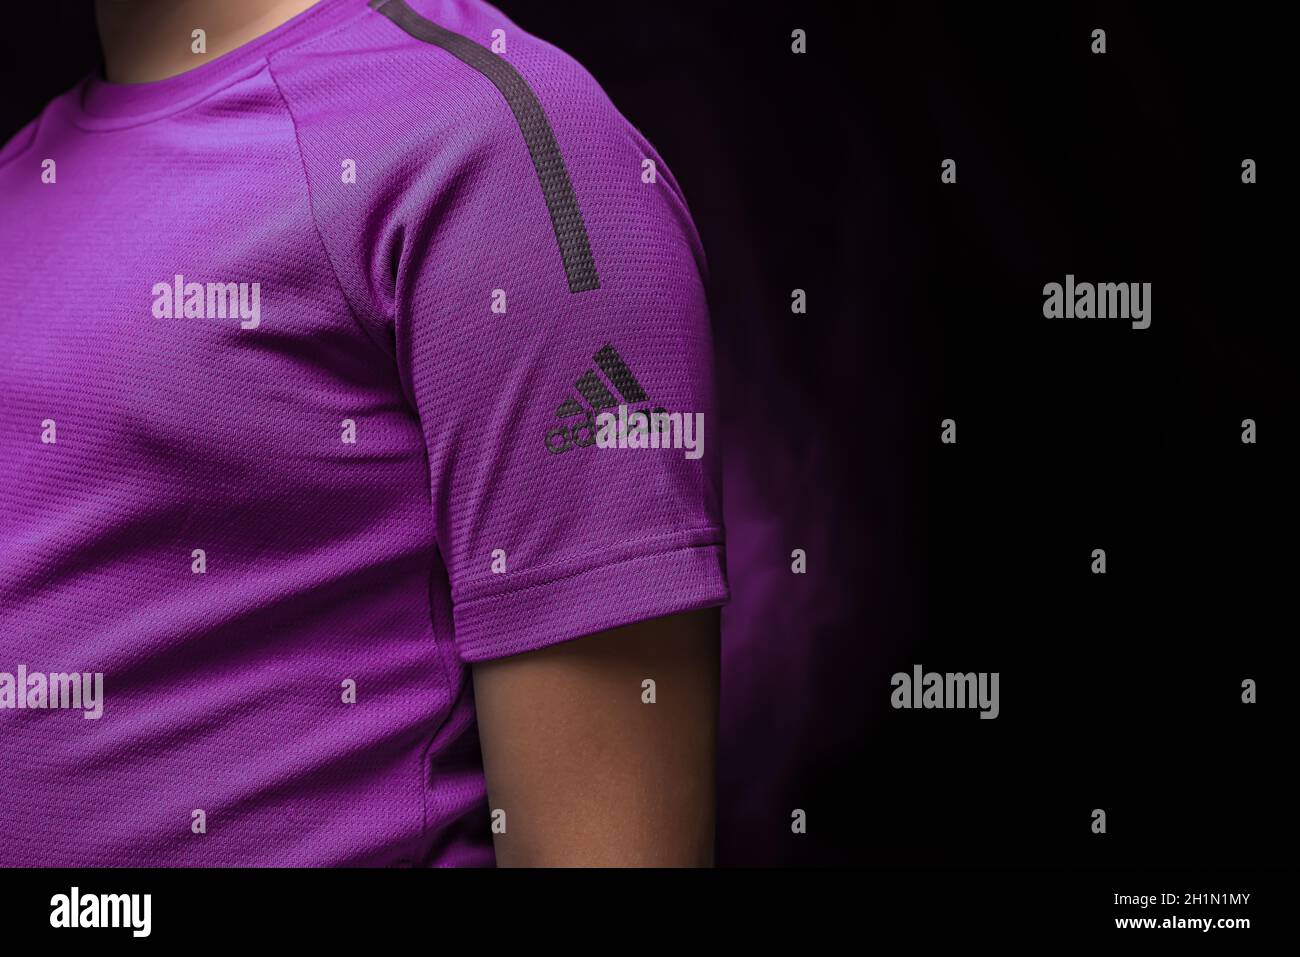 violeta y púrpura deporte elegante camiseta de la empresa alemana adidas  con logo sobre fondo negro retroiluminado aislado Fotografía de stock -  Alamy